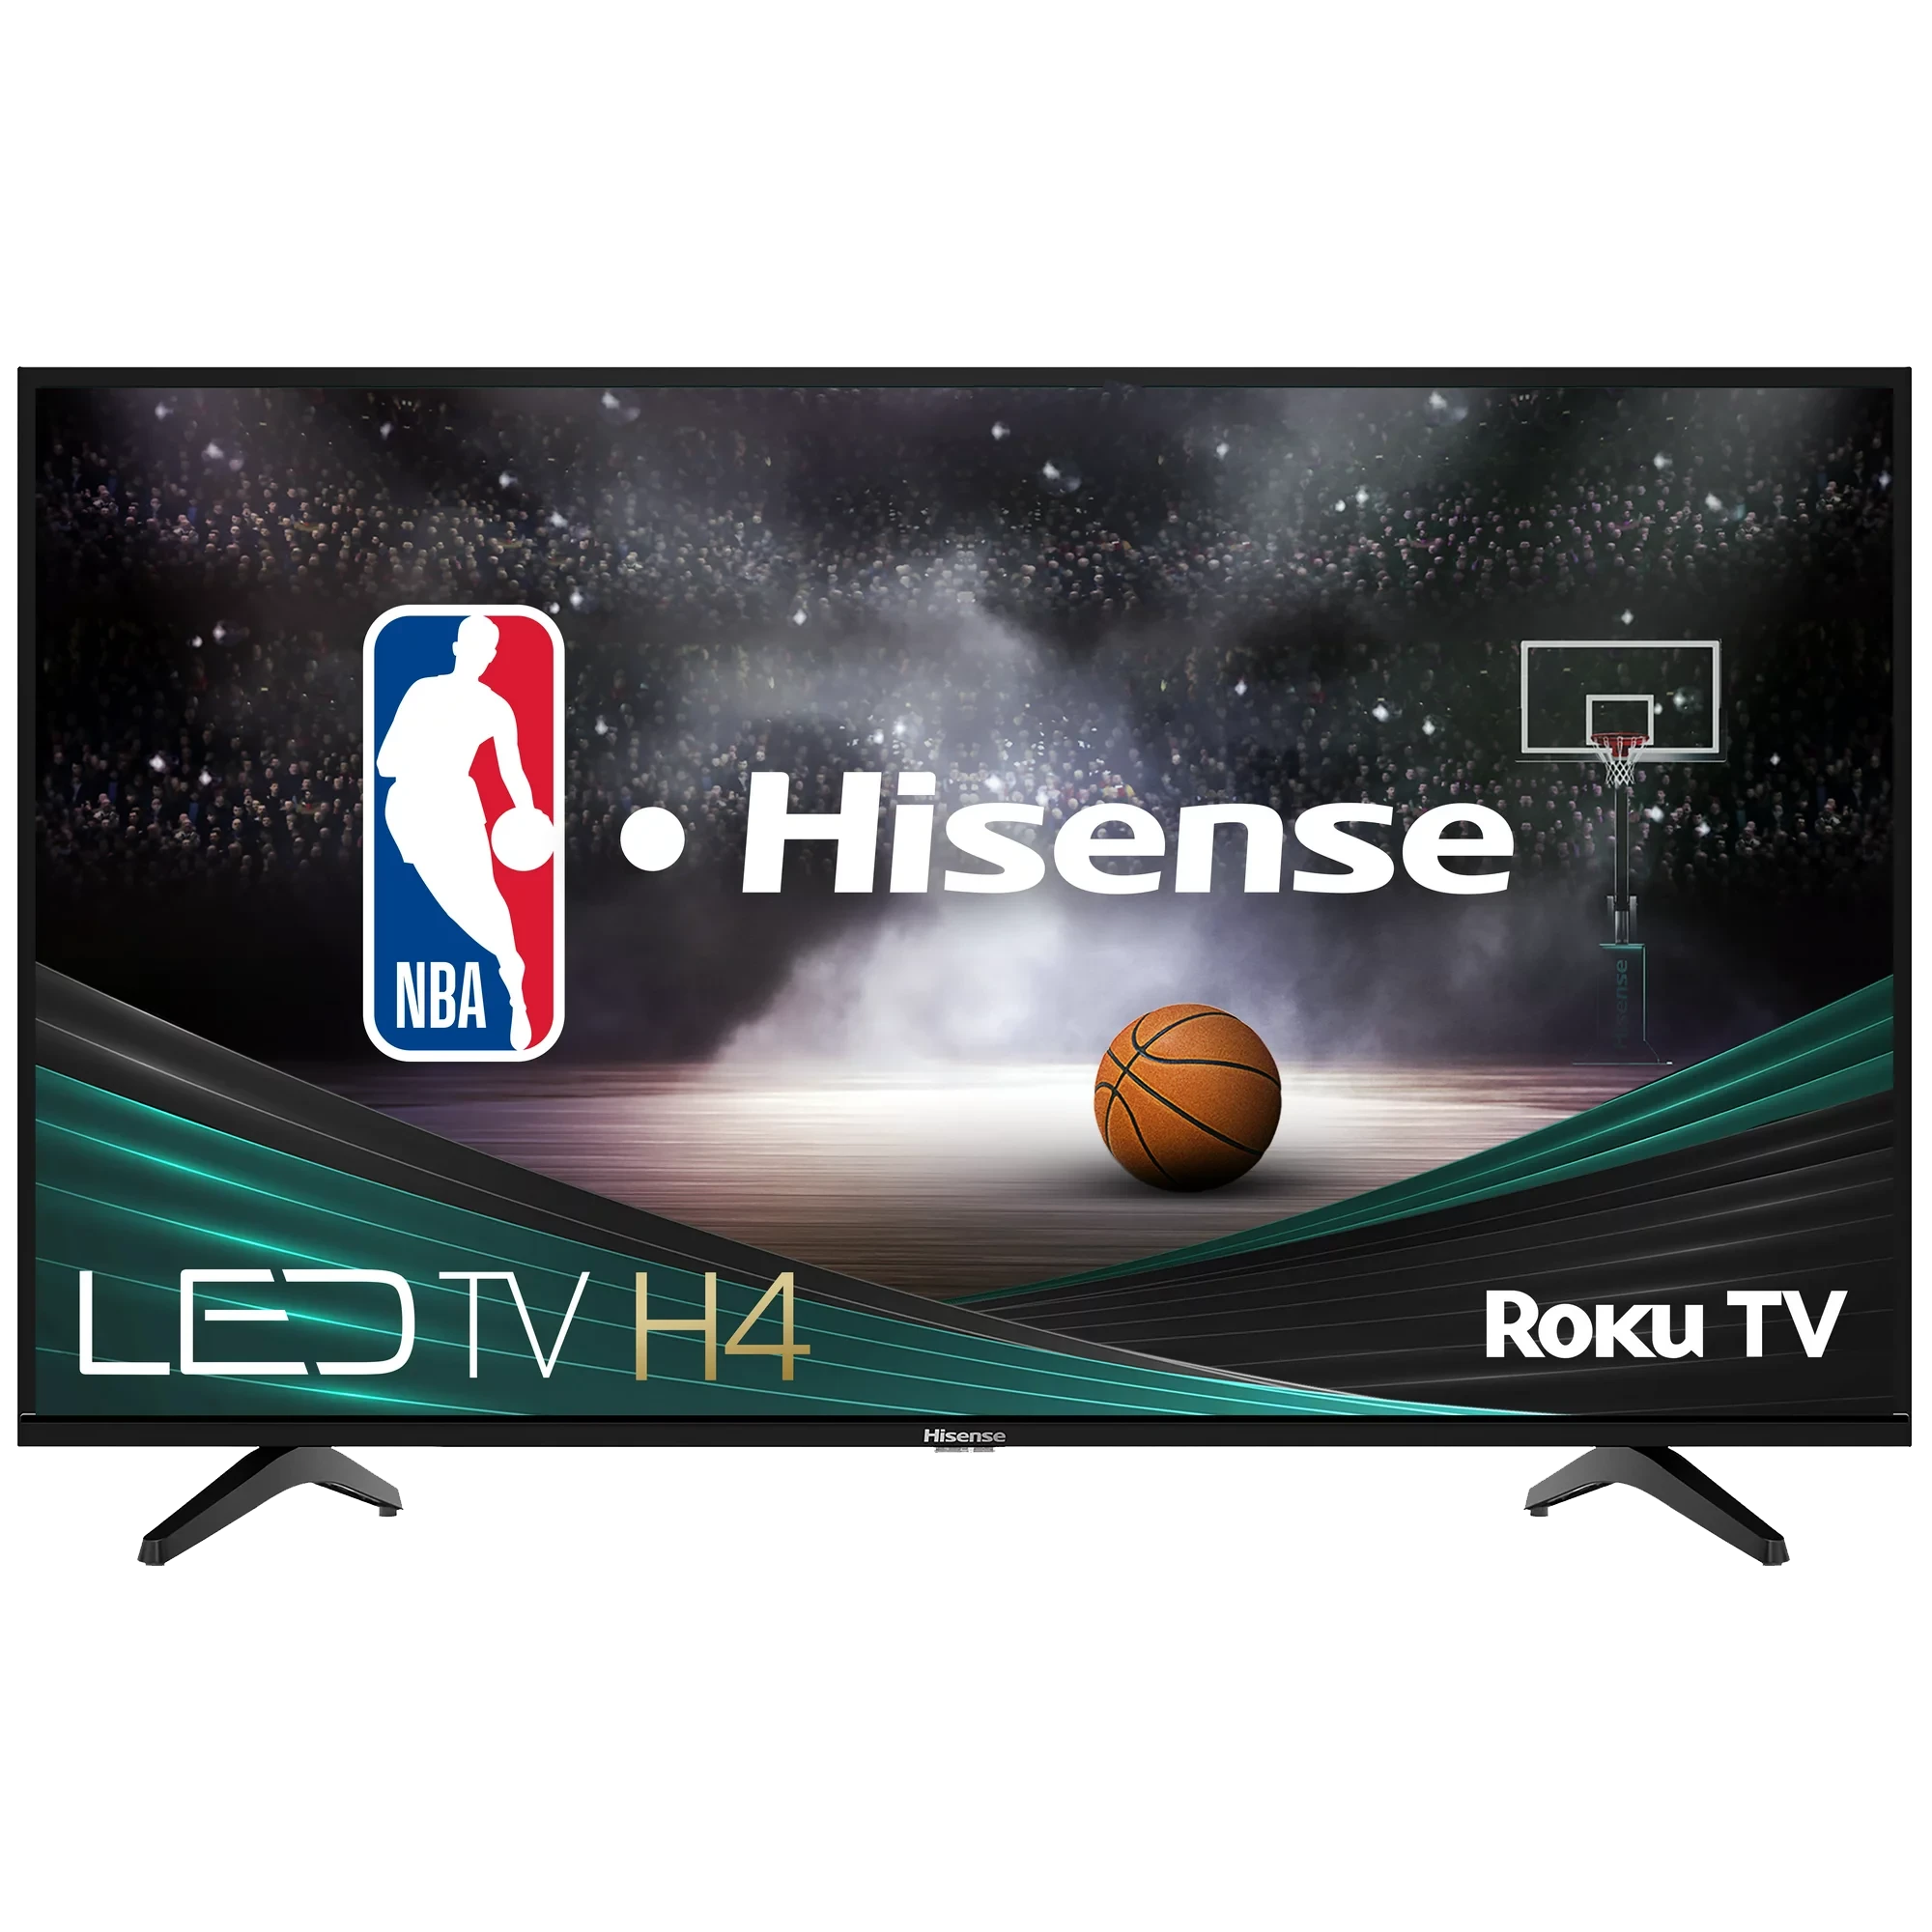 Hisense Roku TV IR Remote